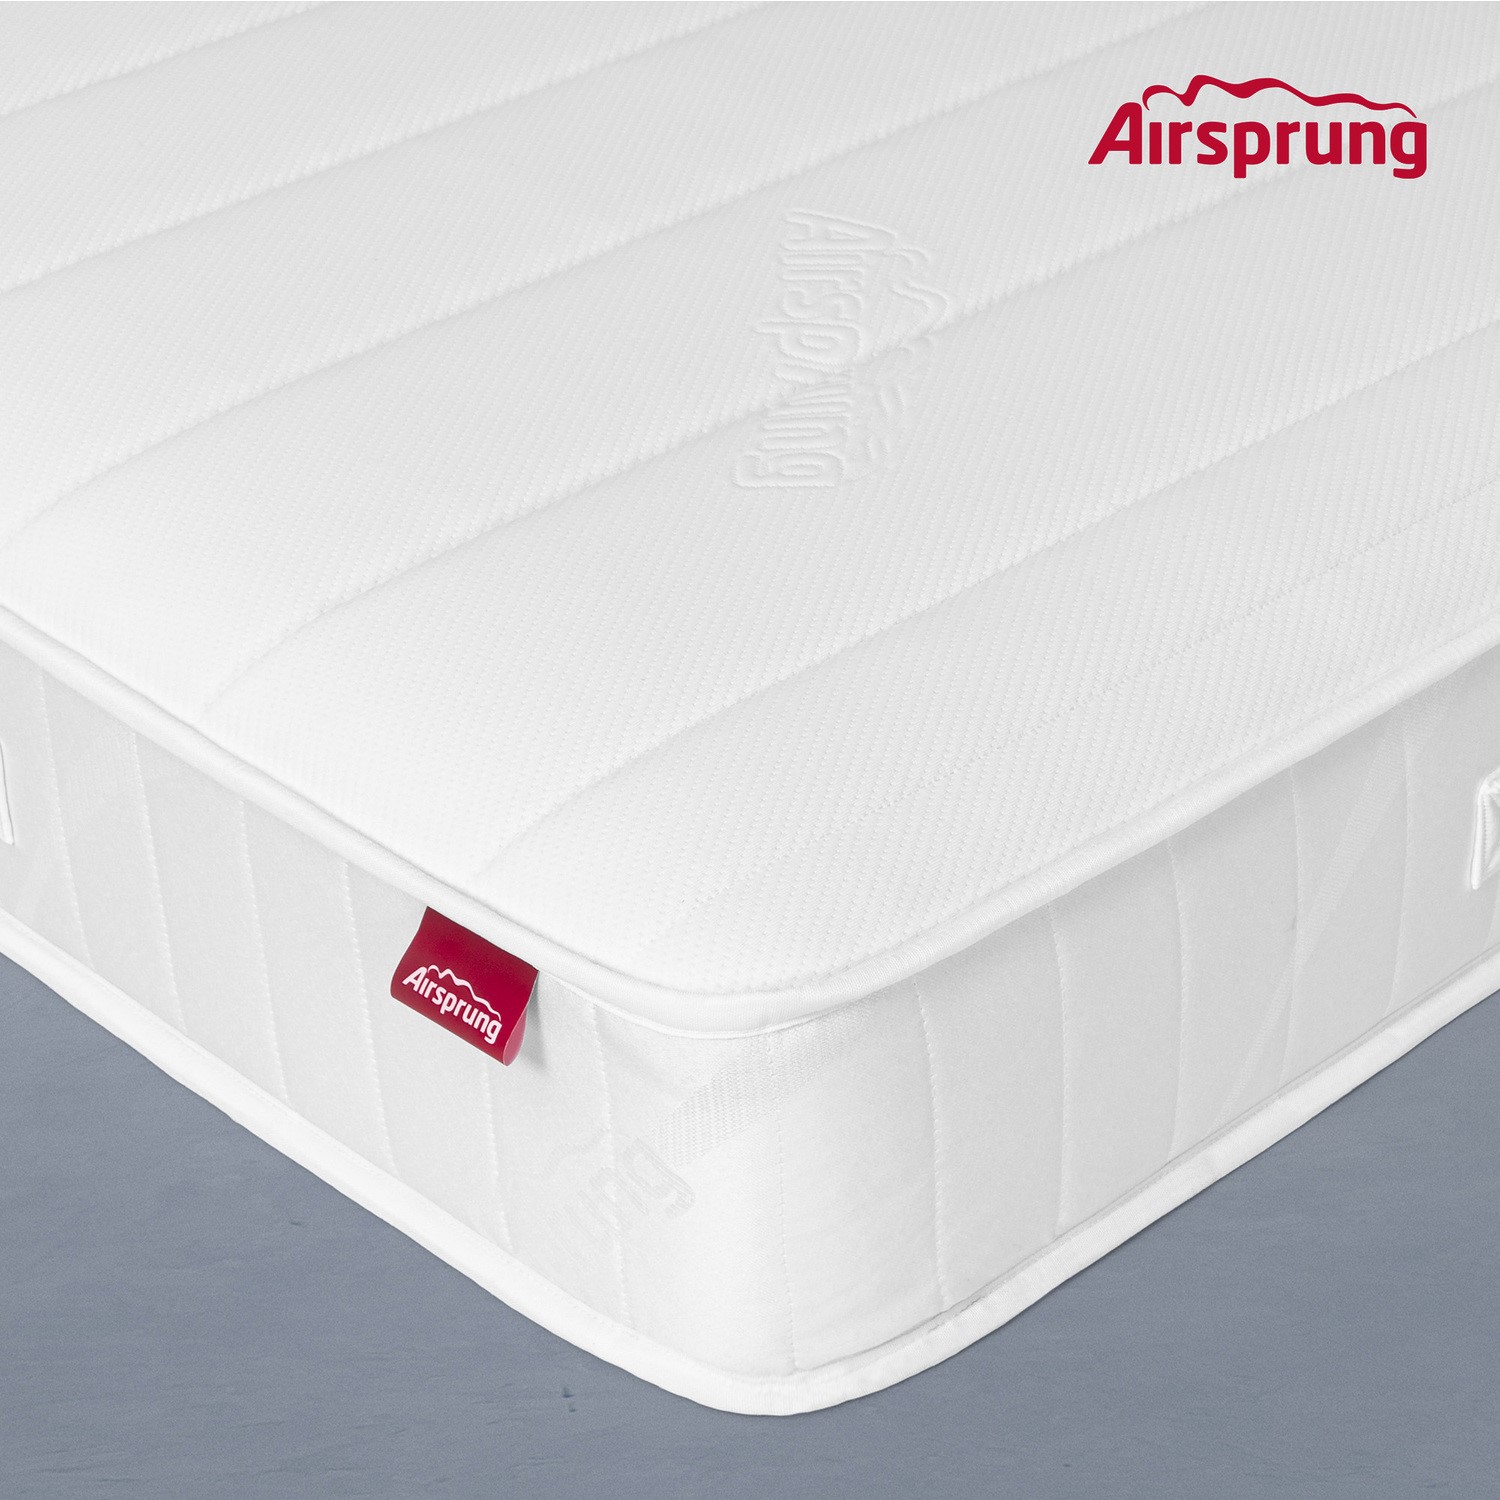 Airsprung hybrid rolled pocket sprung mattress - single